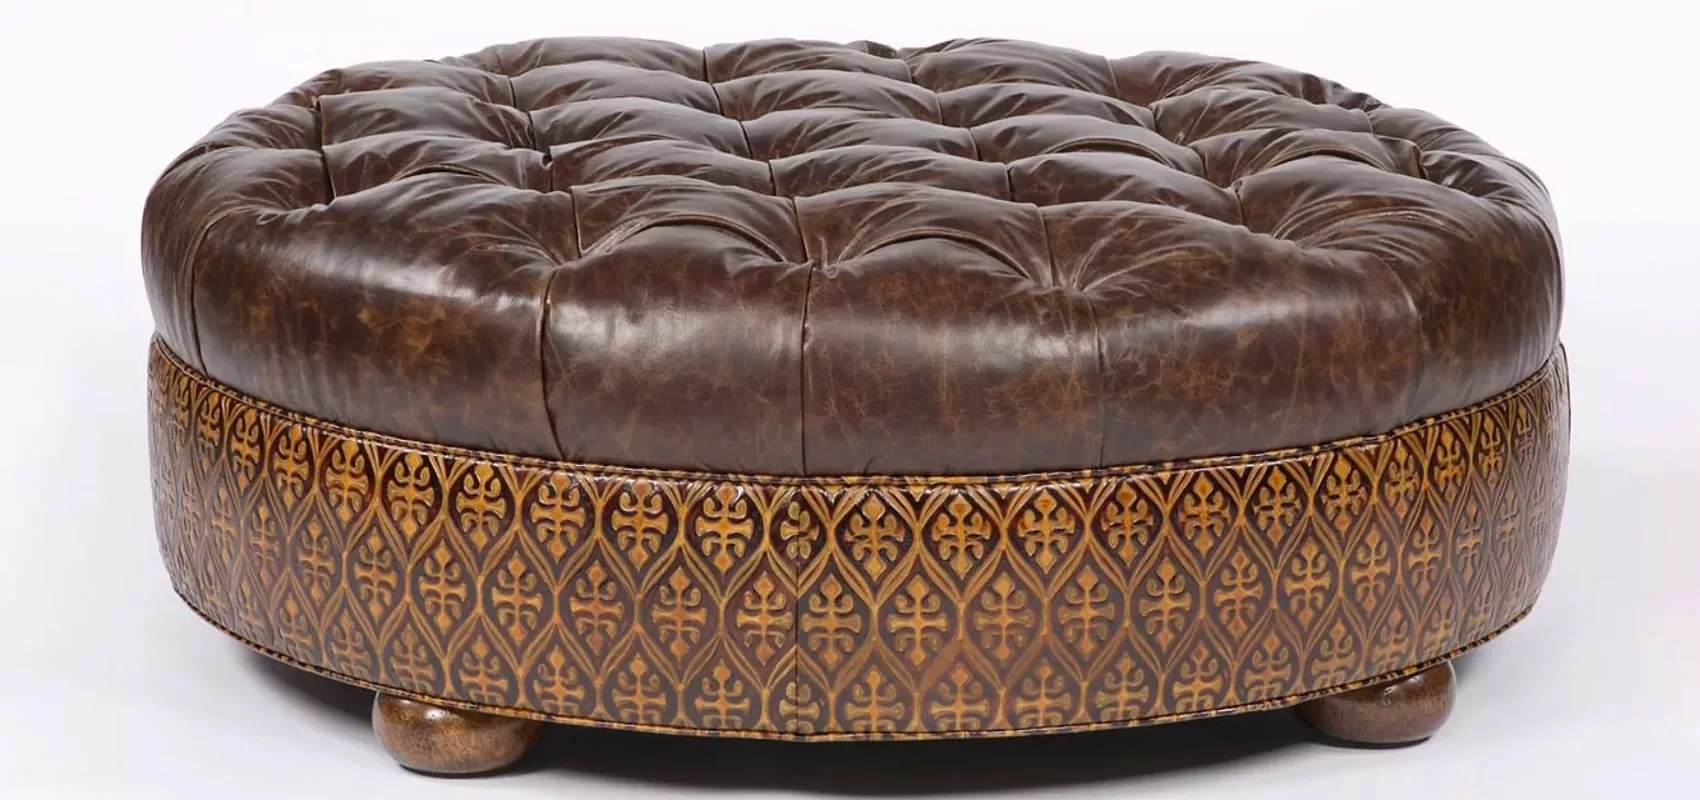 Large Round Leather Ottoman